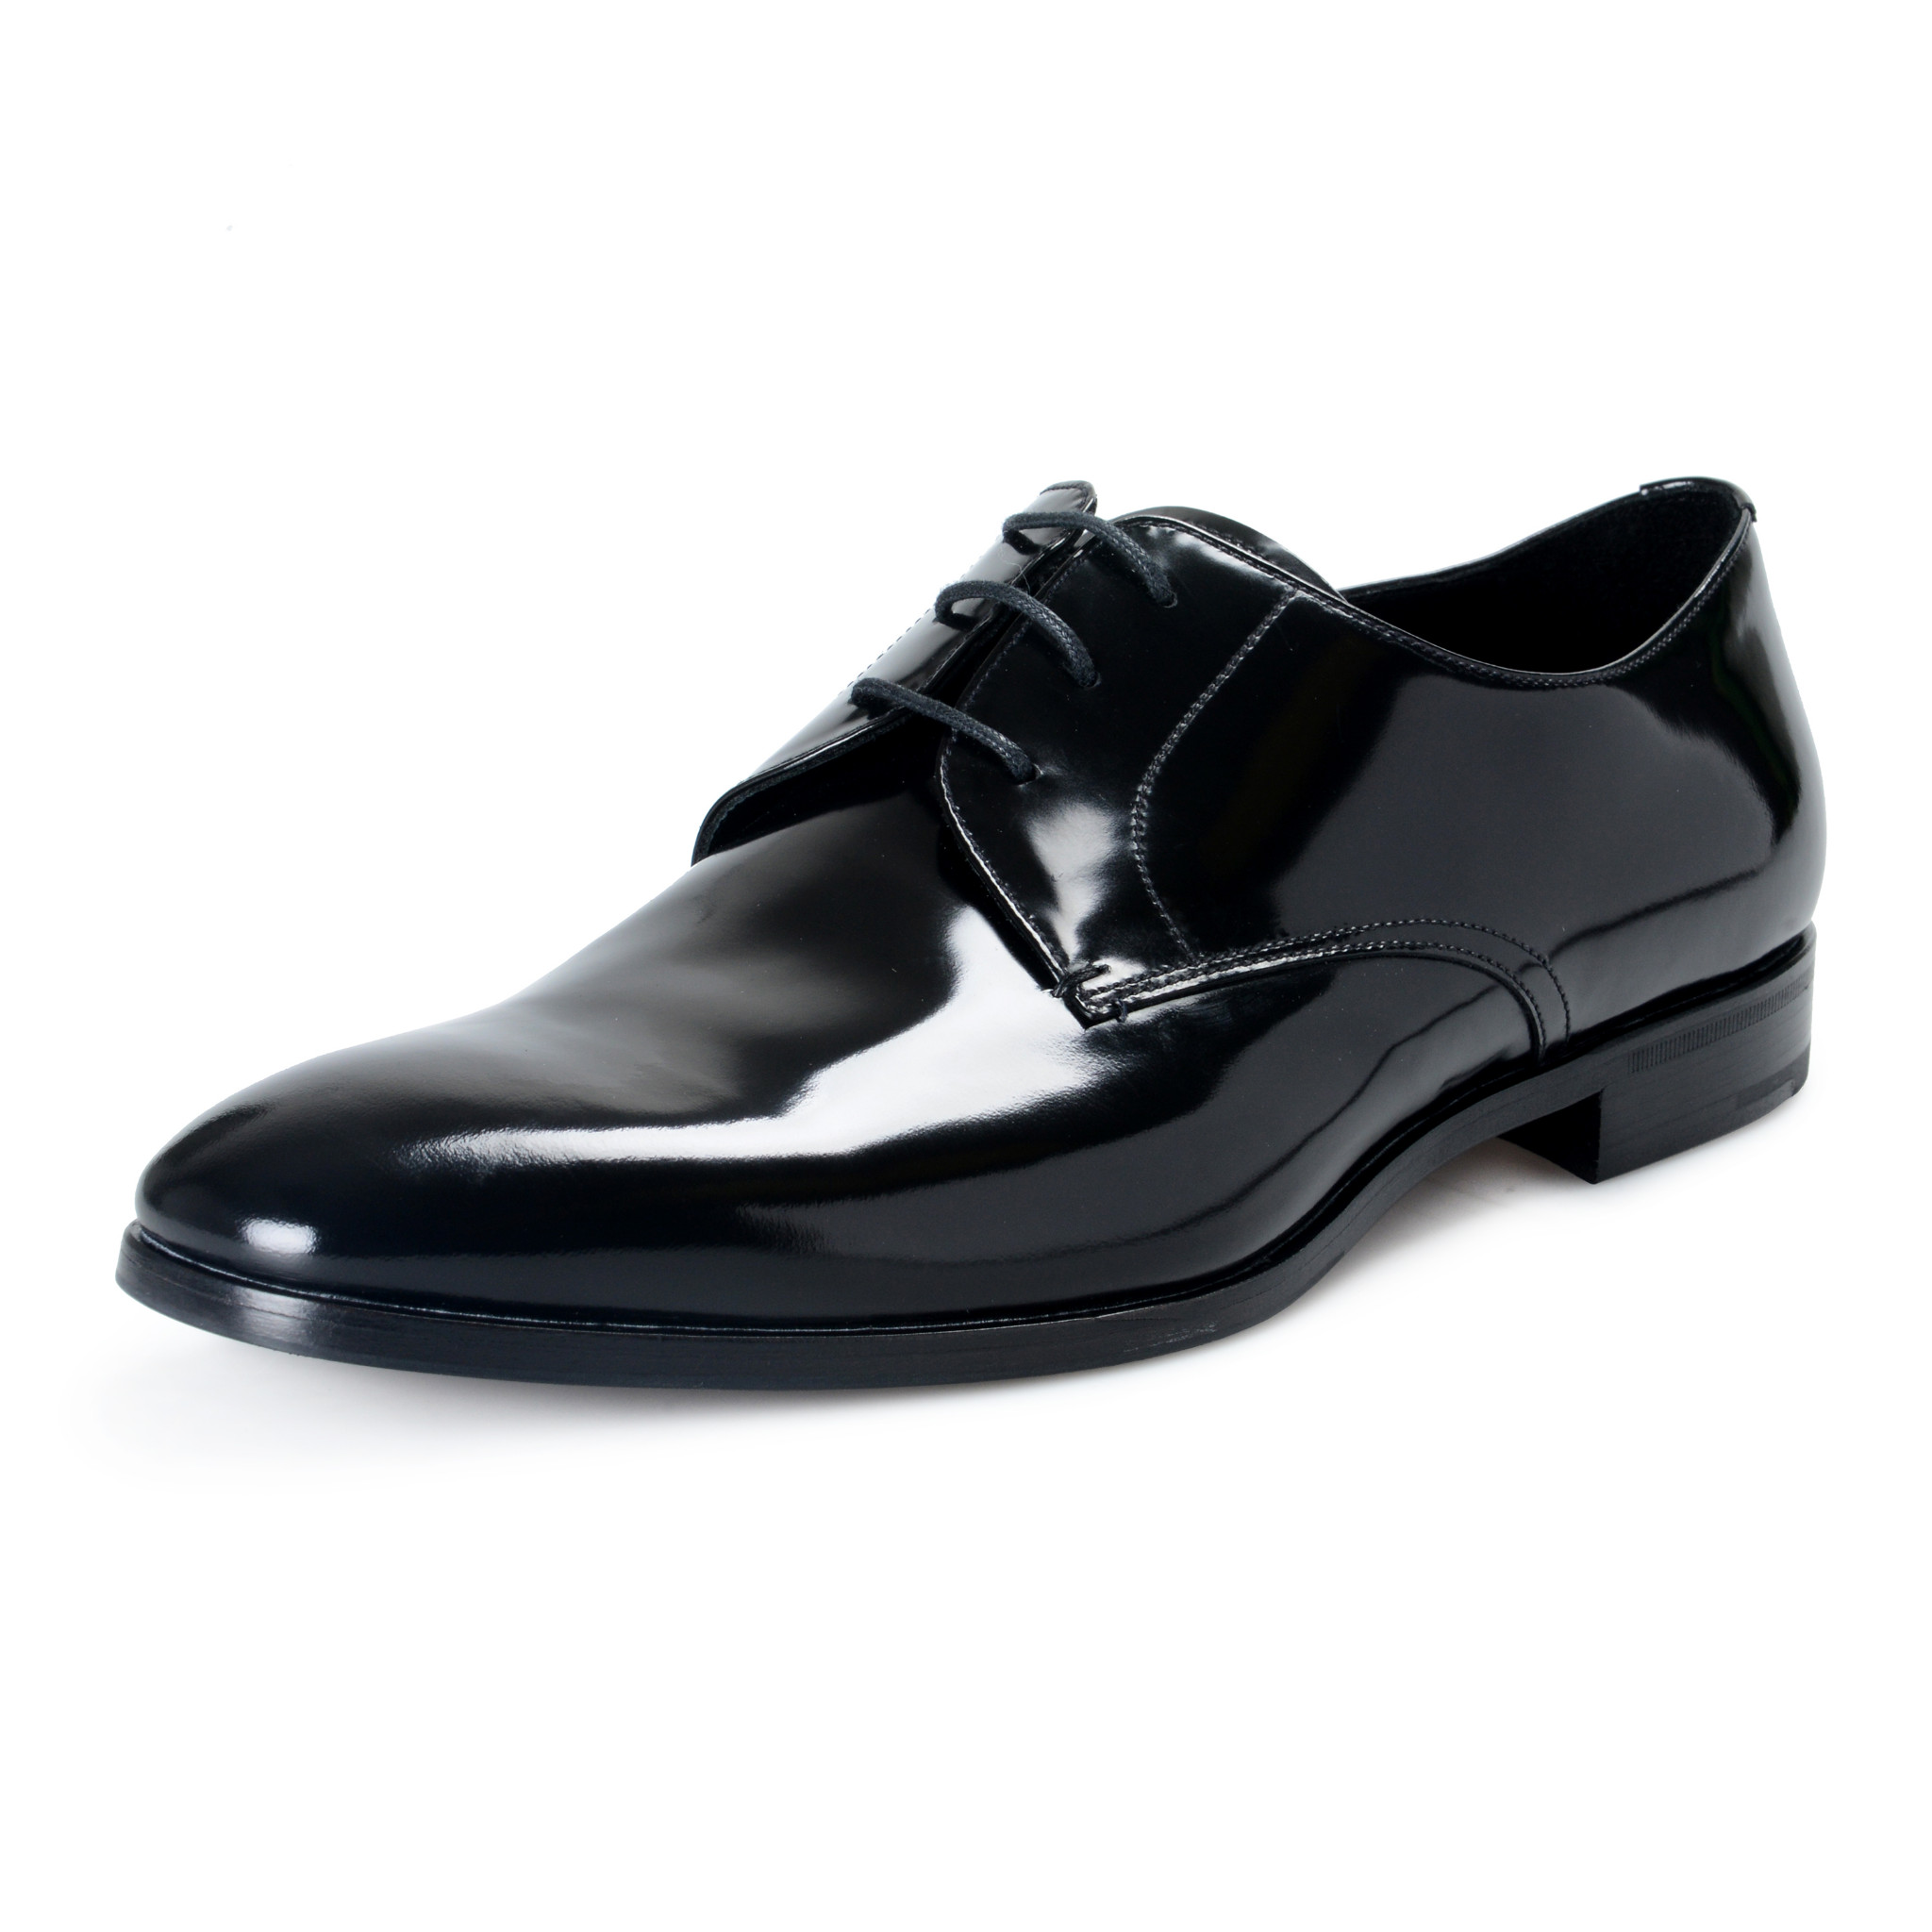 prada men's black leather shoes